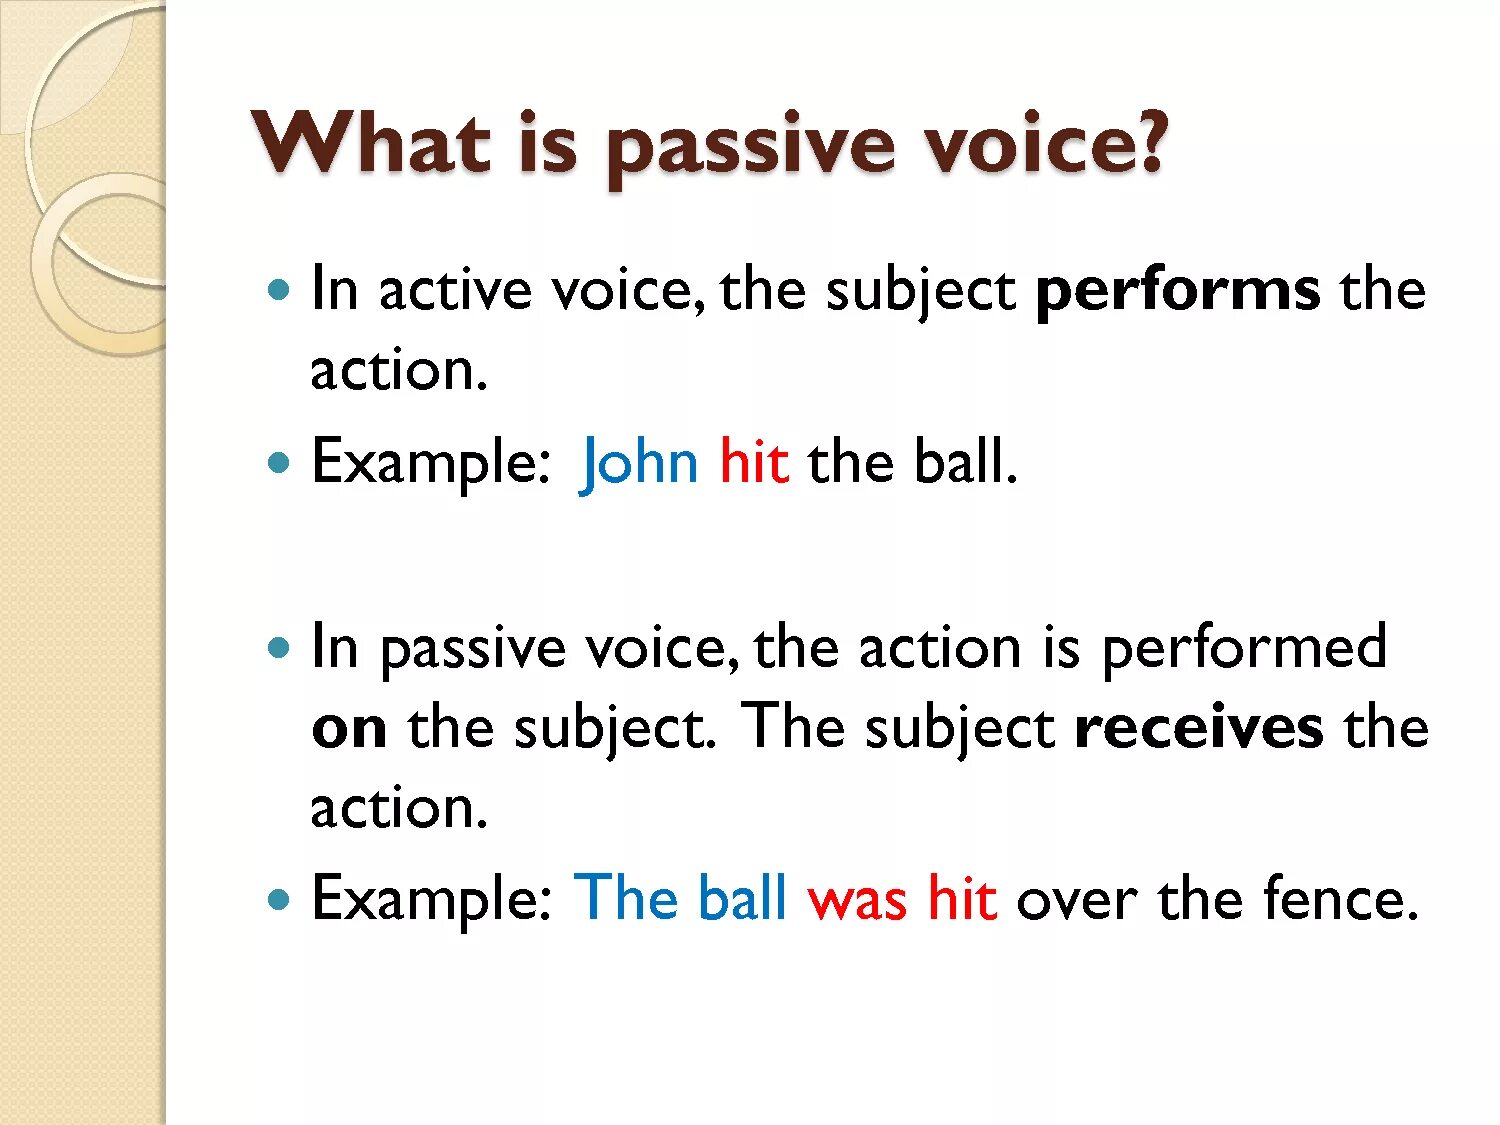 Passive Voice. Active and Passive Voice. What is Passive Voice. Active Voice and Passive Voice. Active passive questions